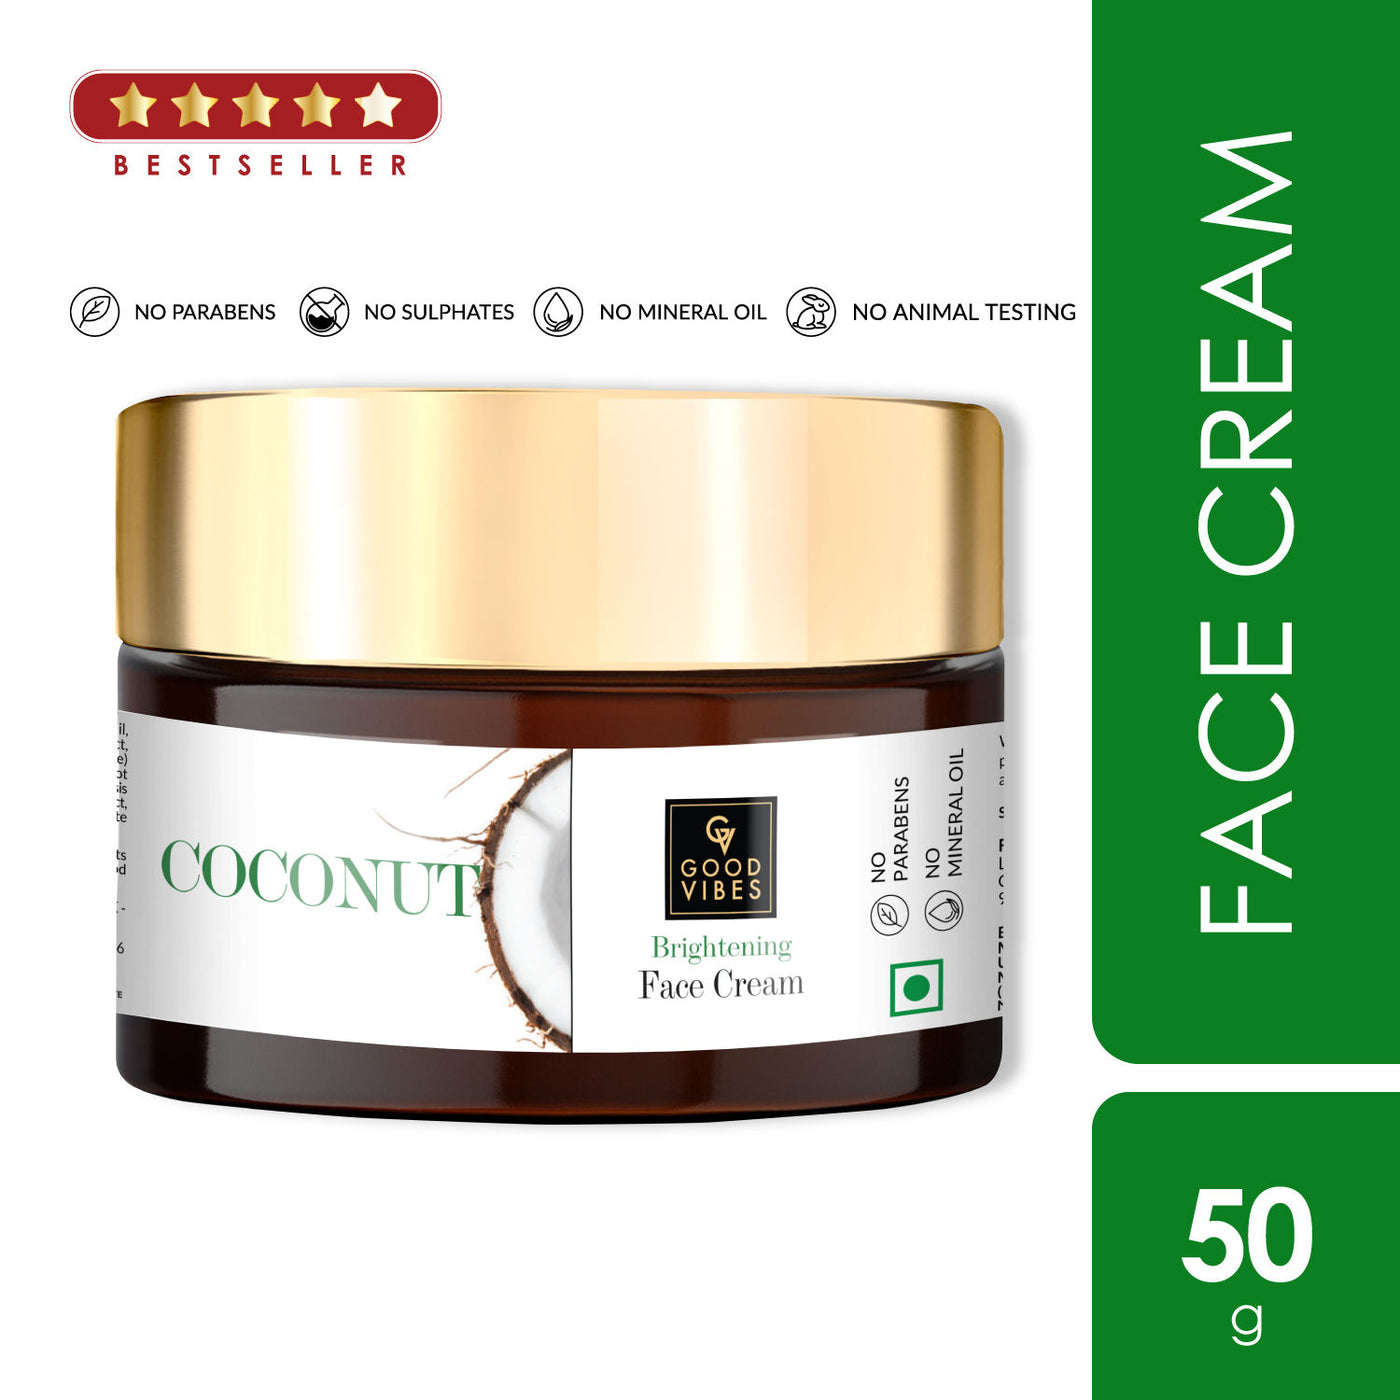 Good Vibes Brightening Face Cream - Coconut (50 g) - 2